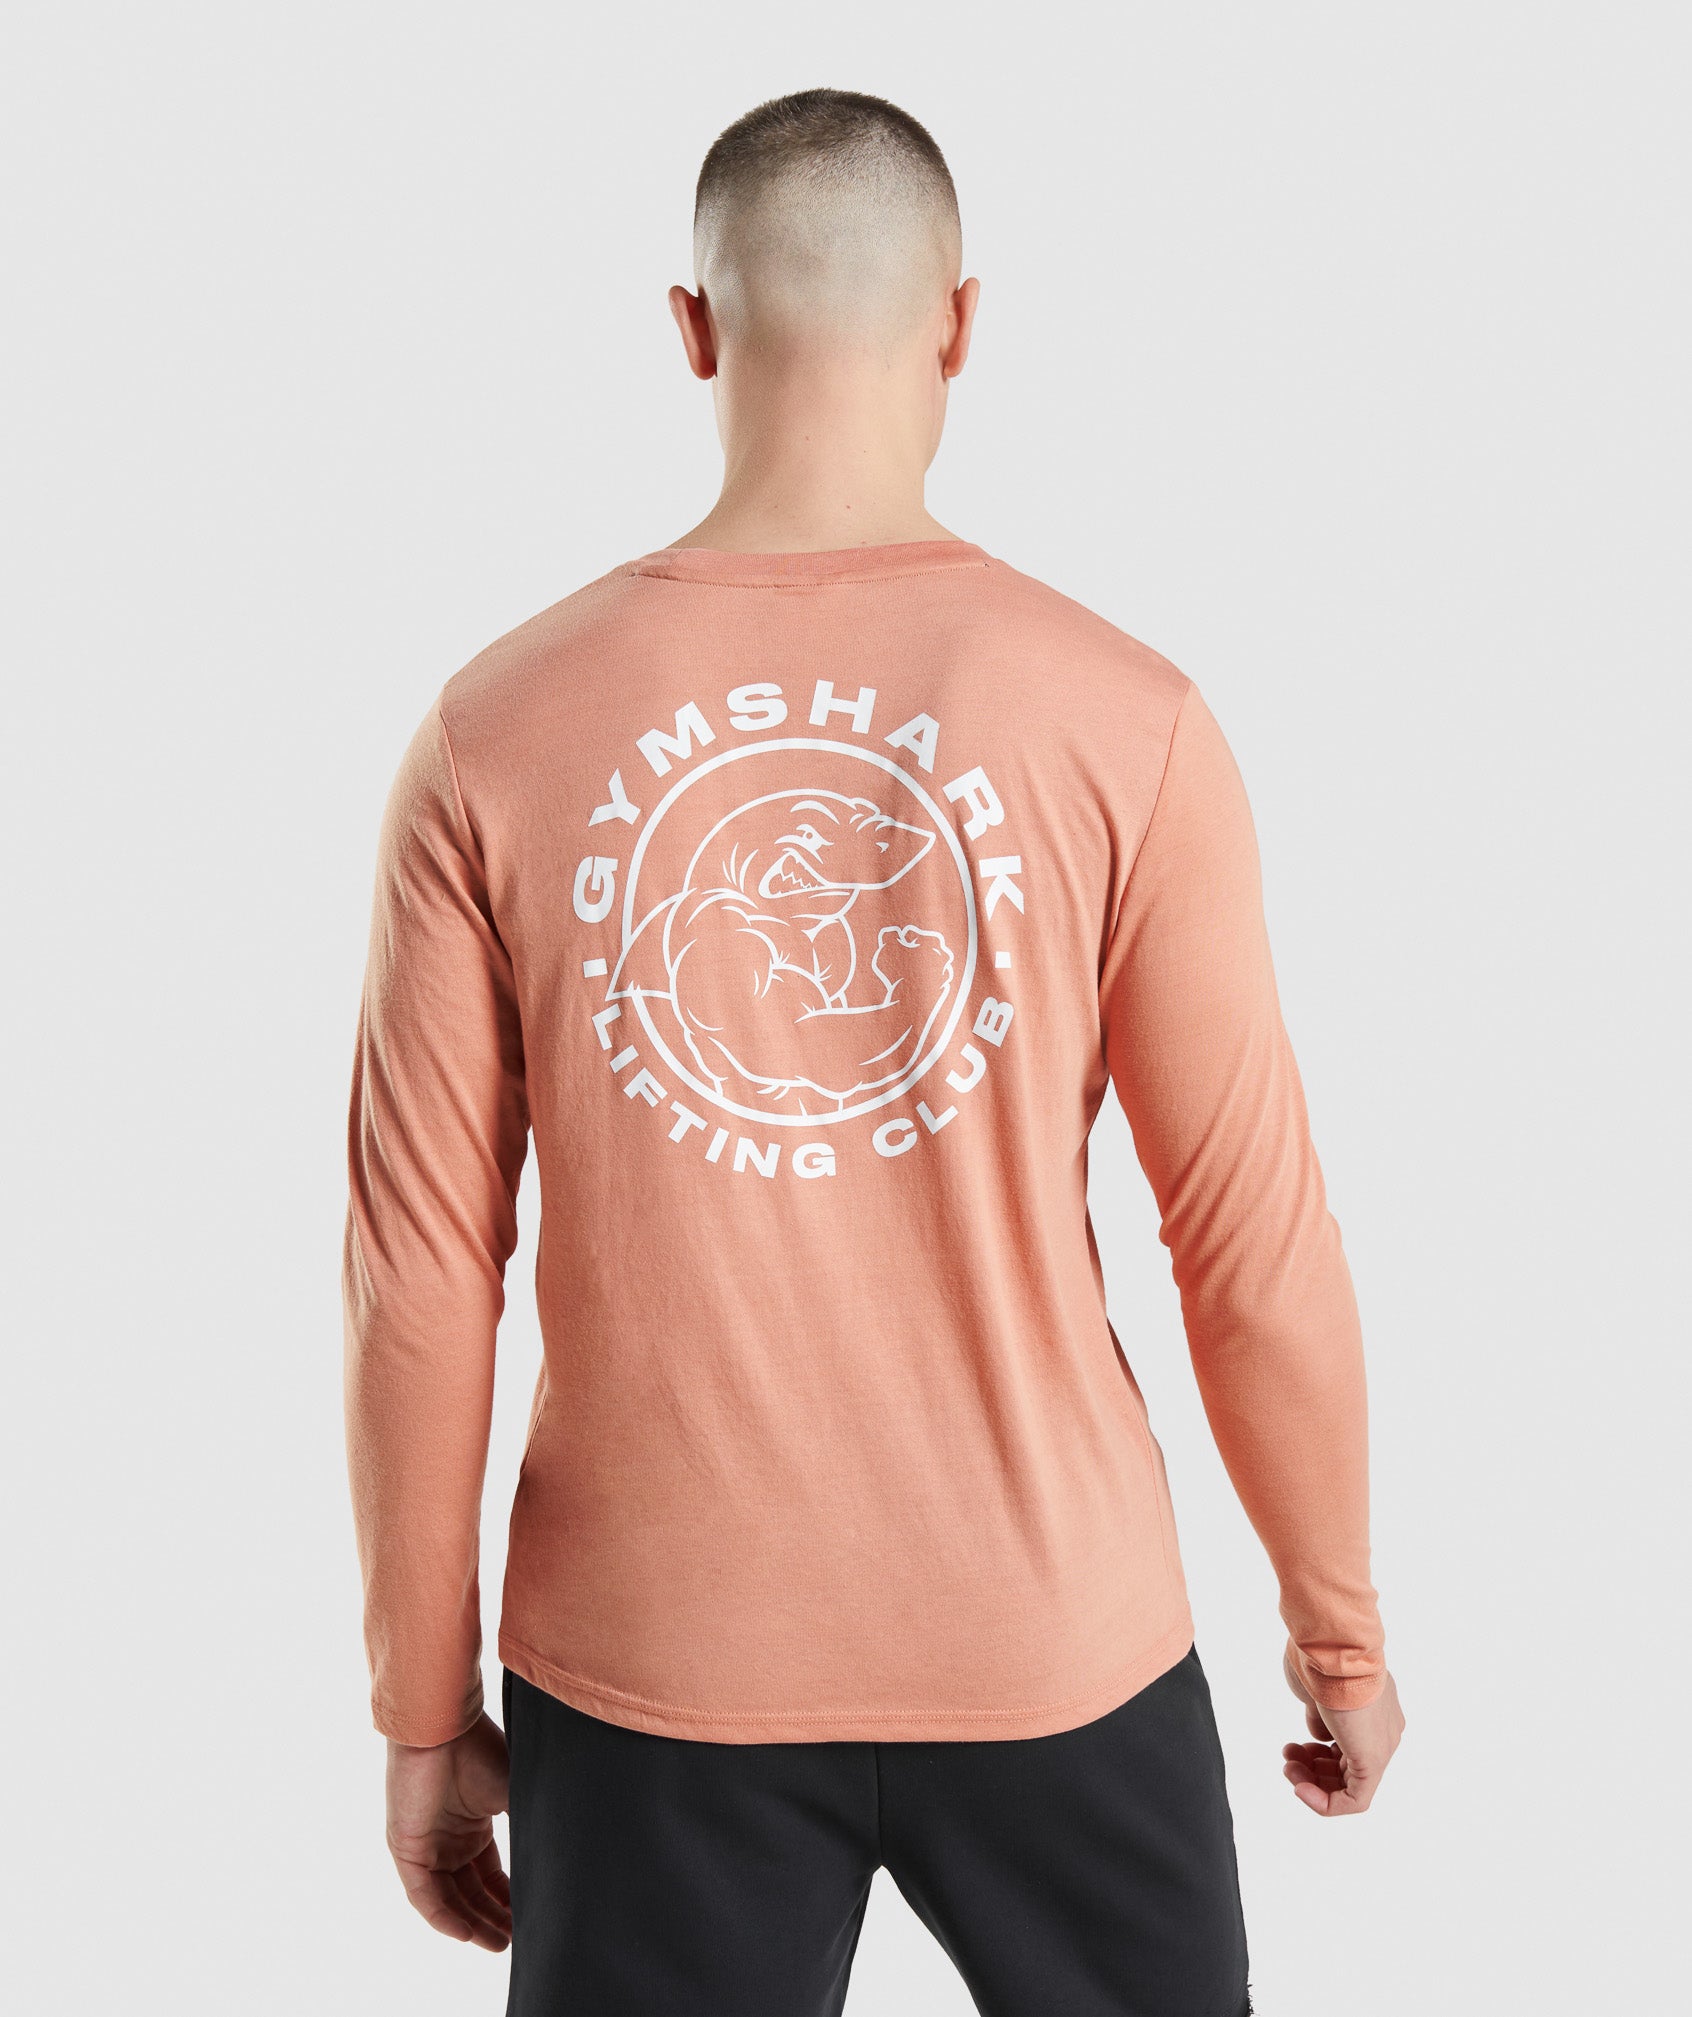 Gymshark Essential Oversized T-Shirt - Nevada Pink